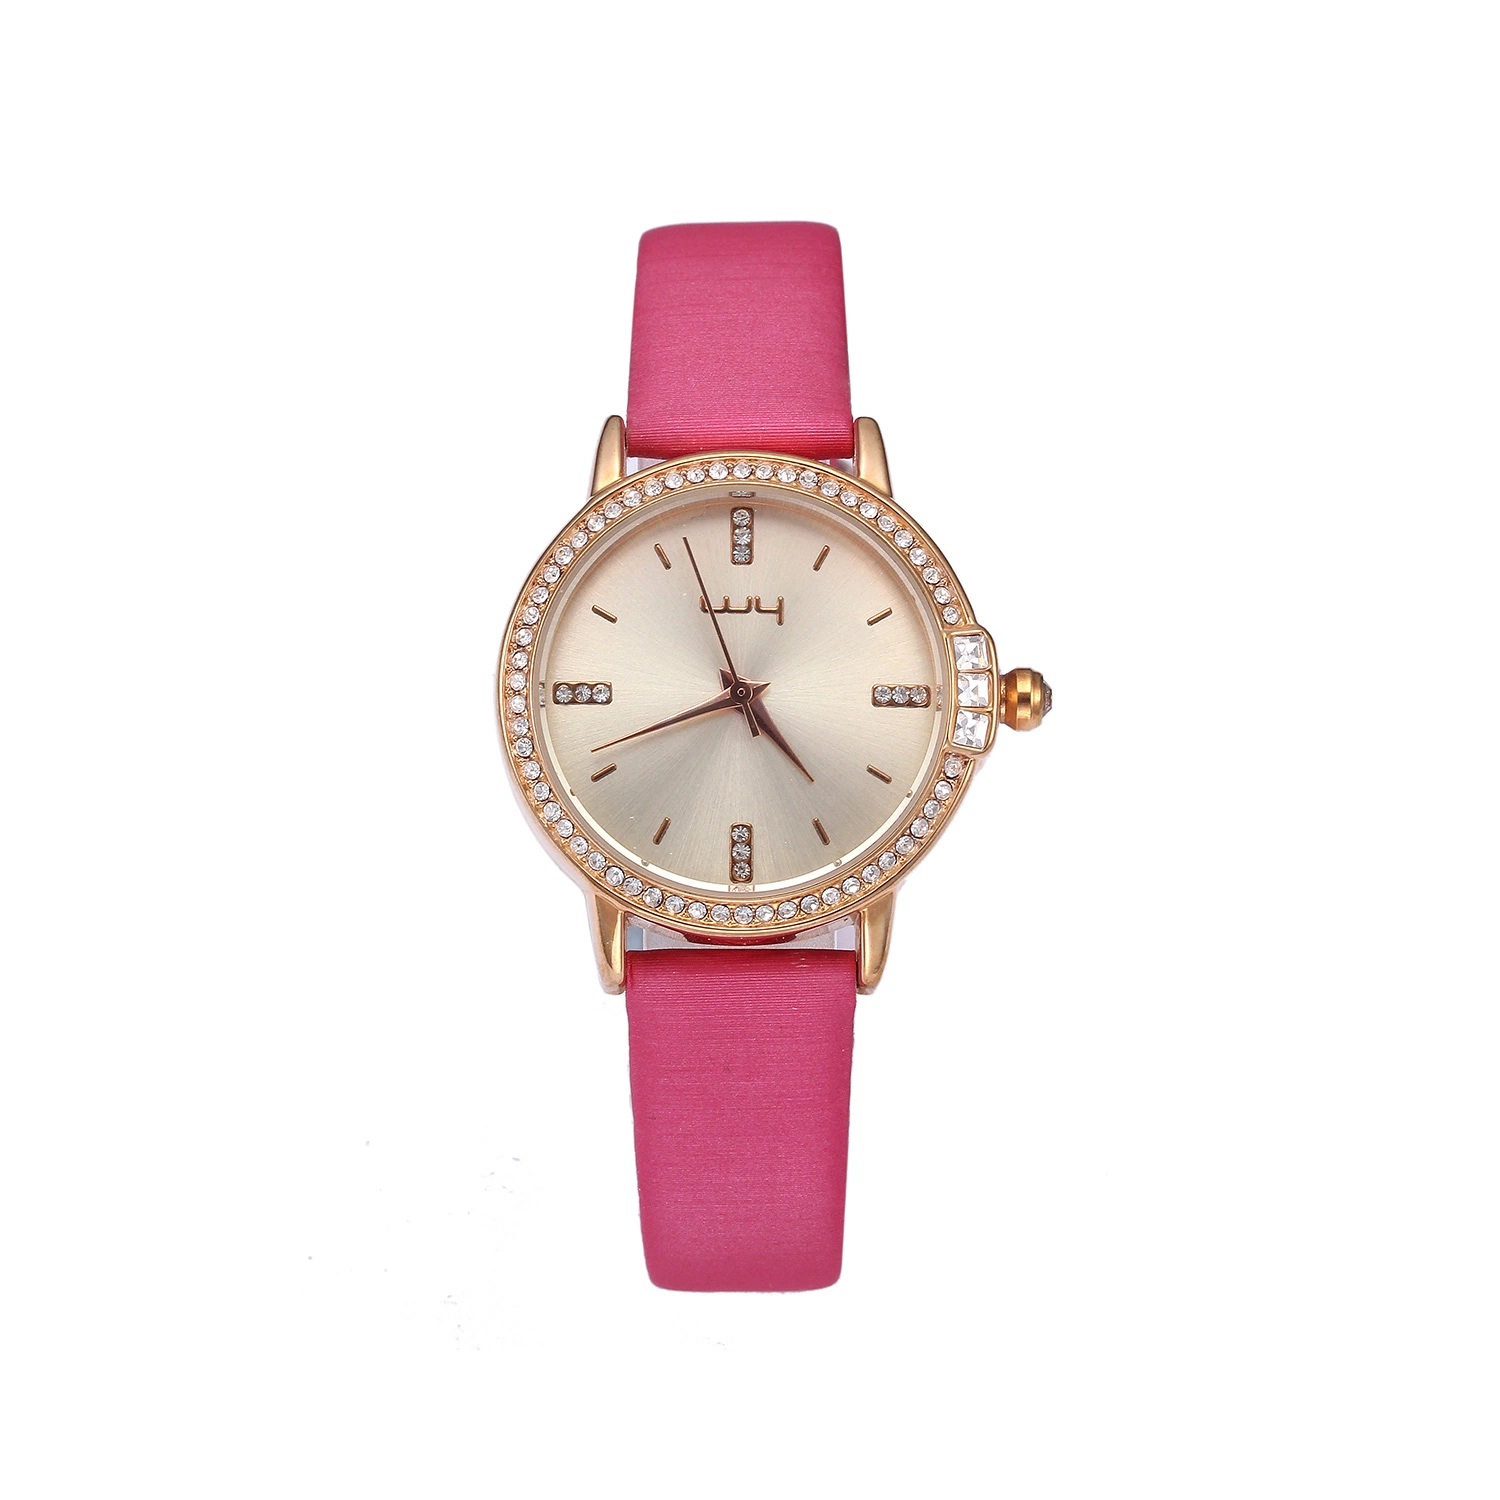 Stock de fábrica de moda Dama reloj de pulsera suizo (WY-013)